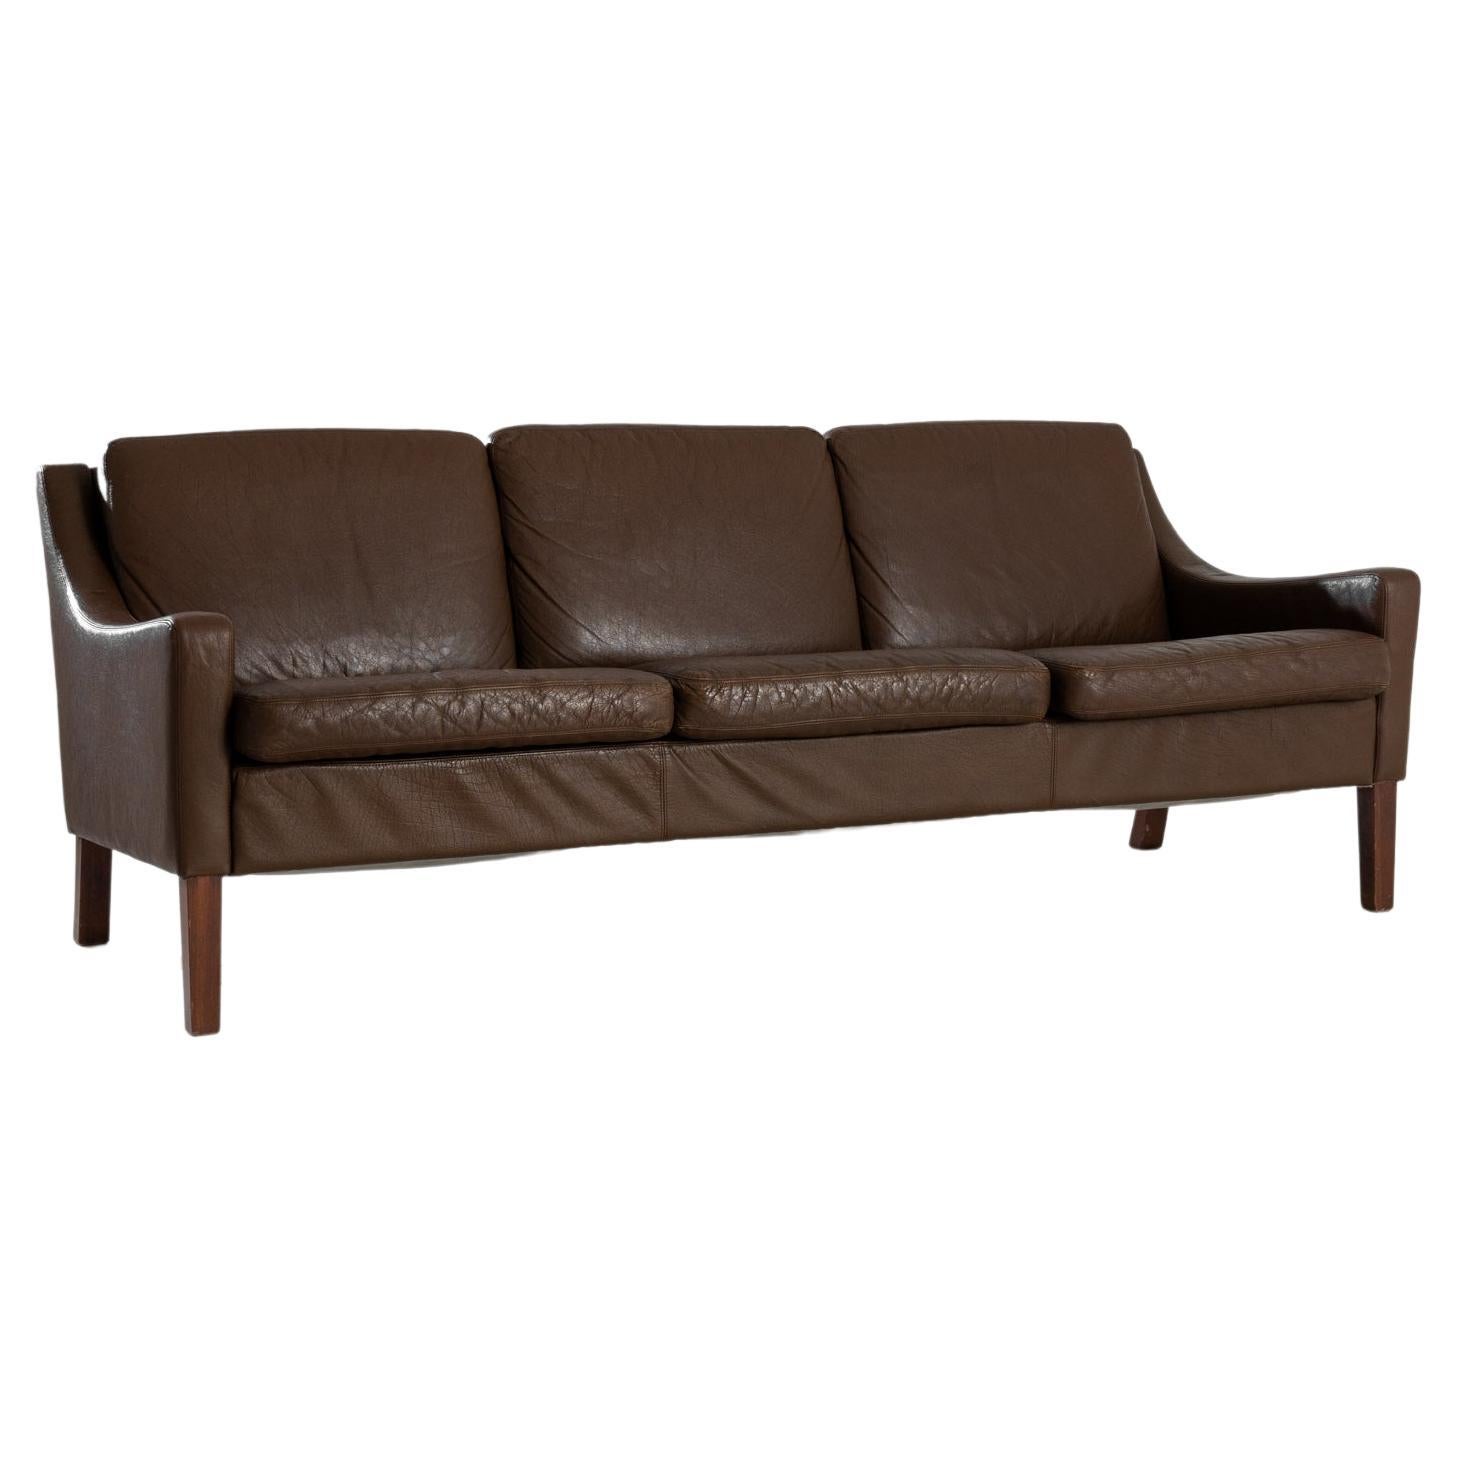 20th Century Danish Leather Sofa